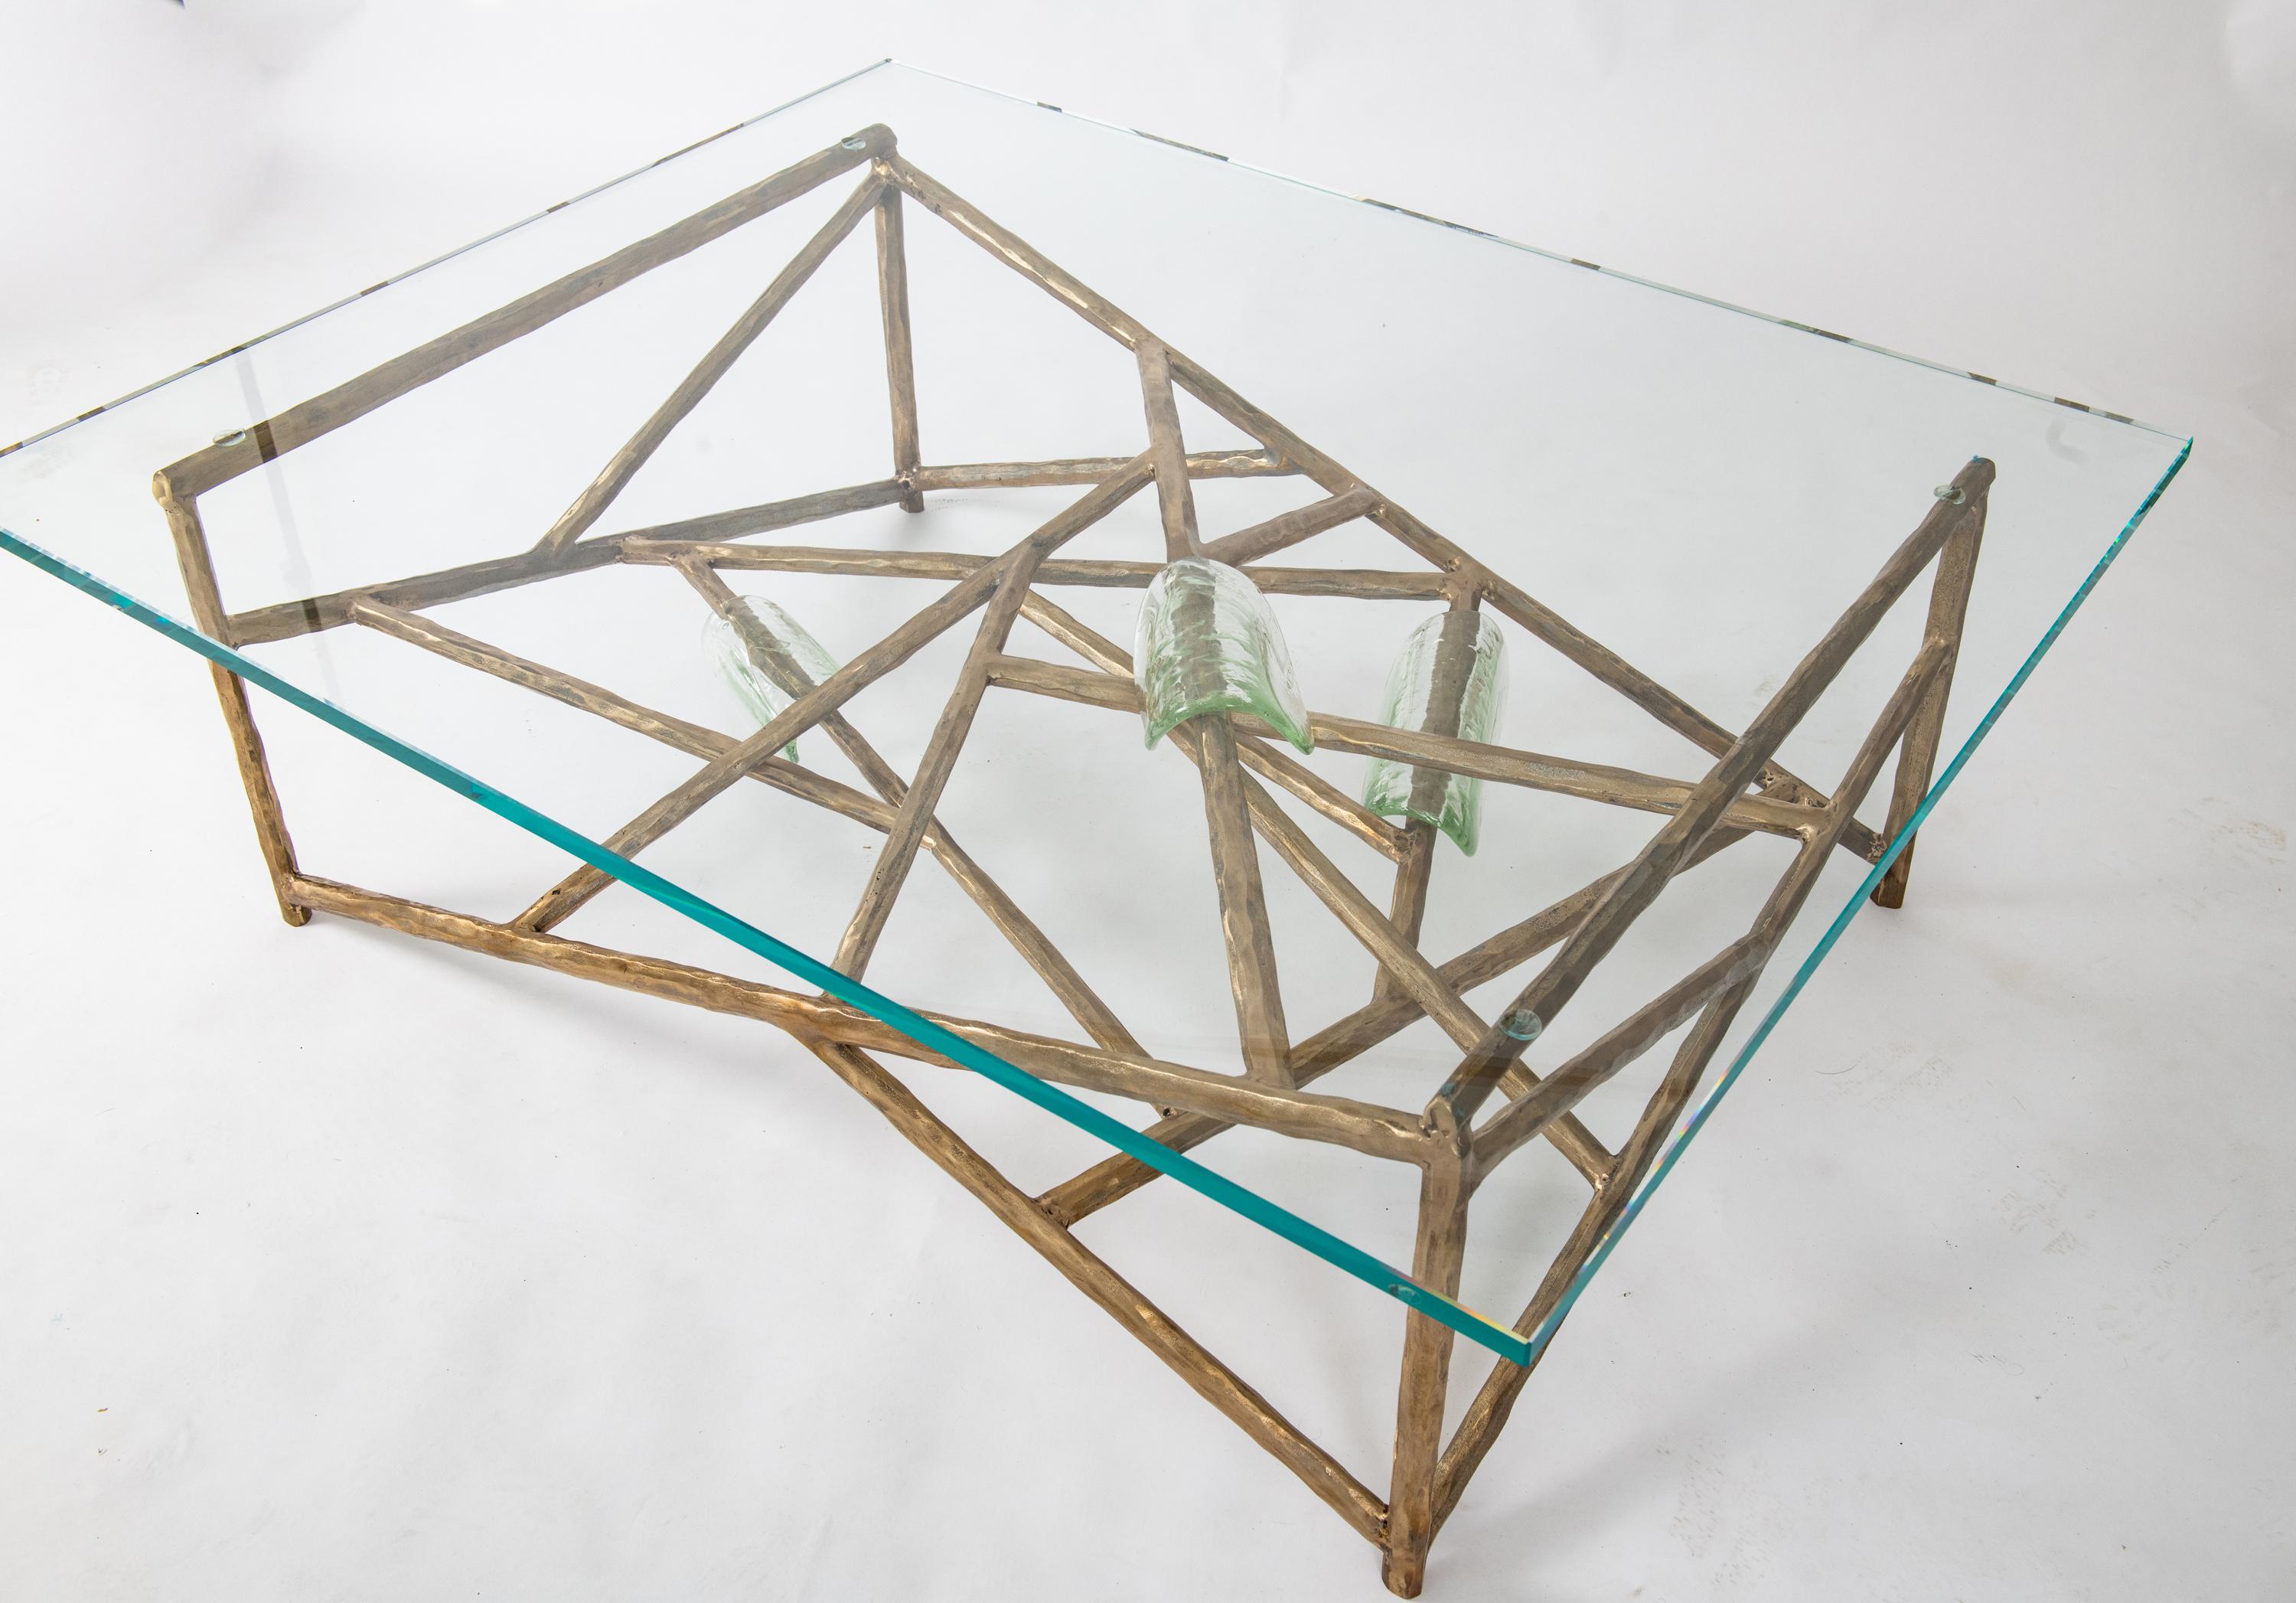 Gregory Nangle
Constraint-Tabelle, 2021
Bronzeguss und Glas
Maße: 17 x 50 x 40 Zoll.